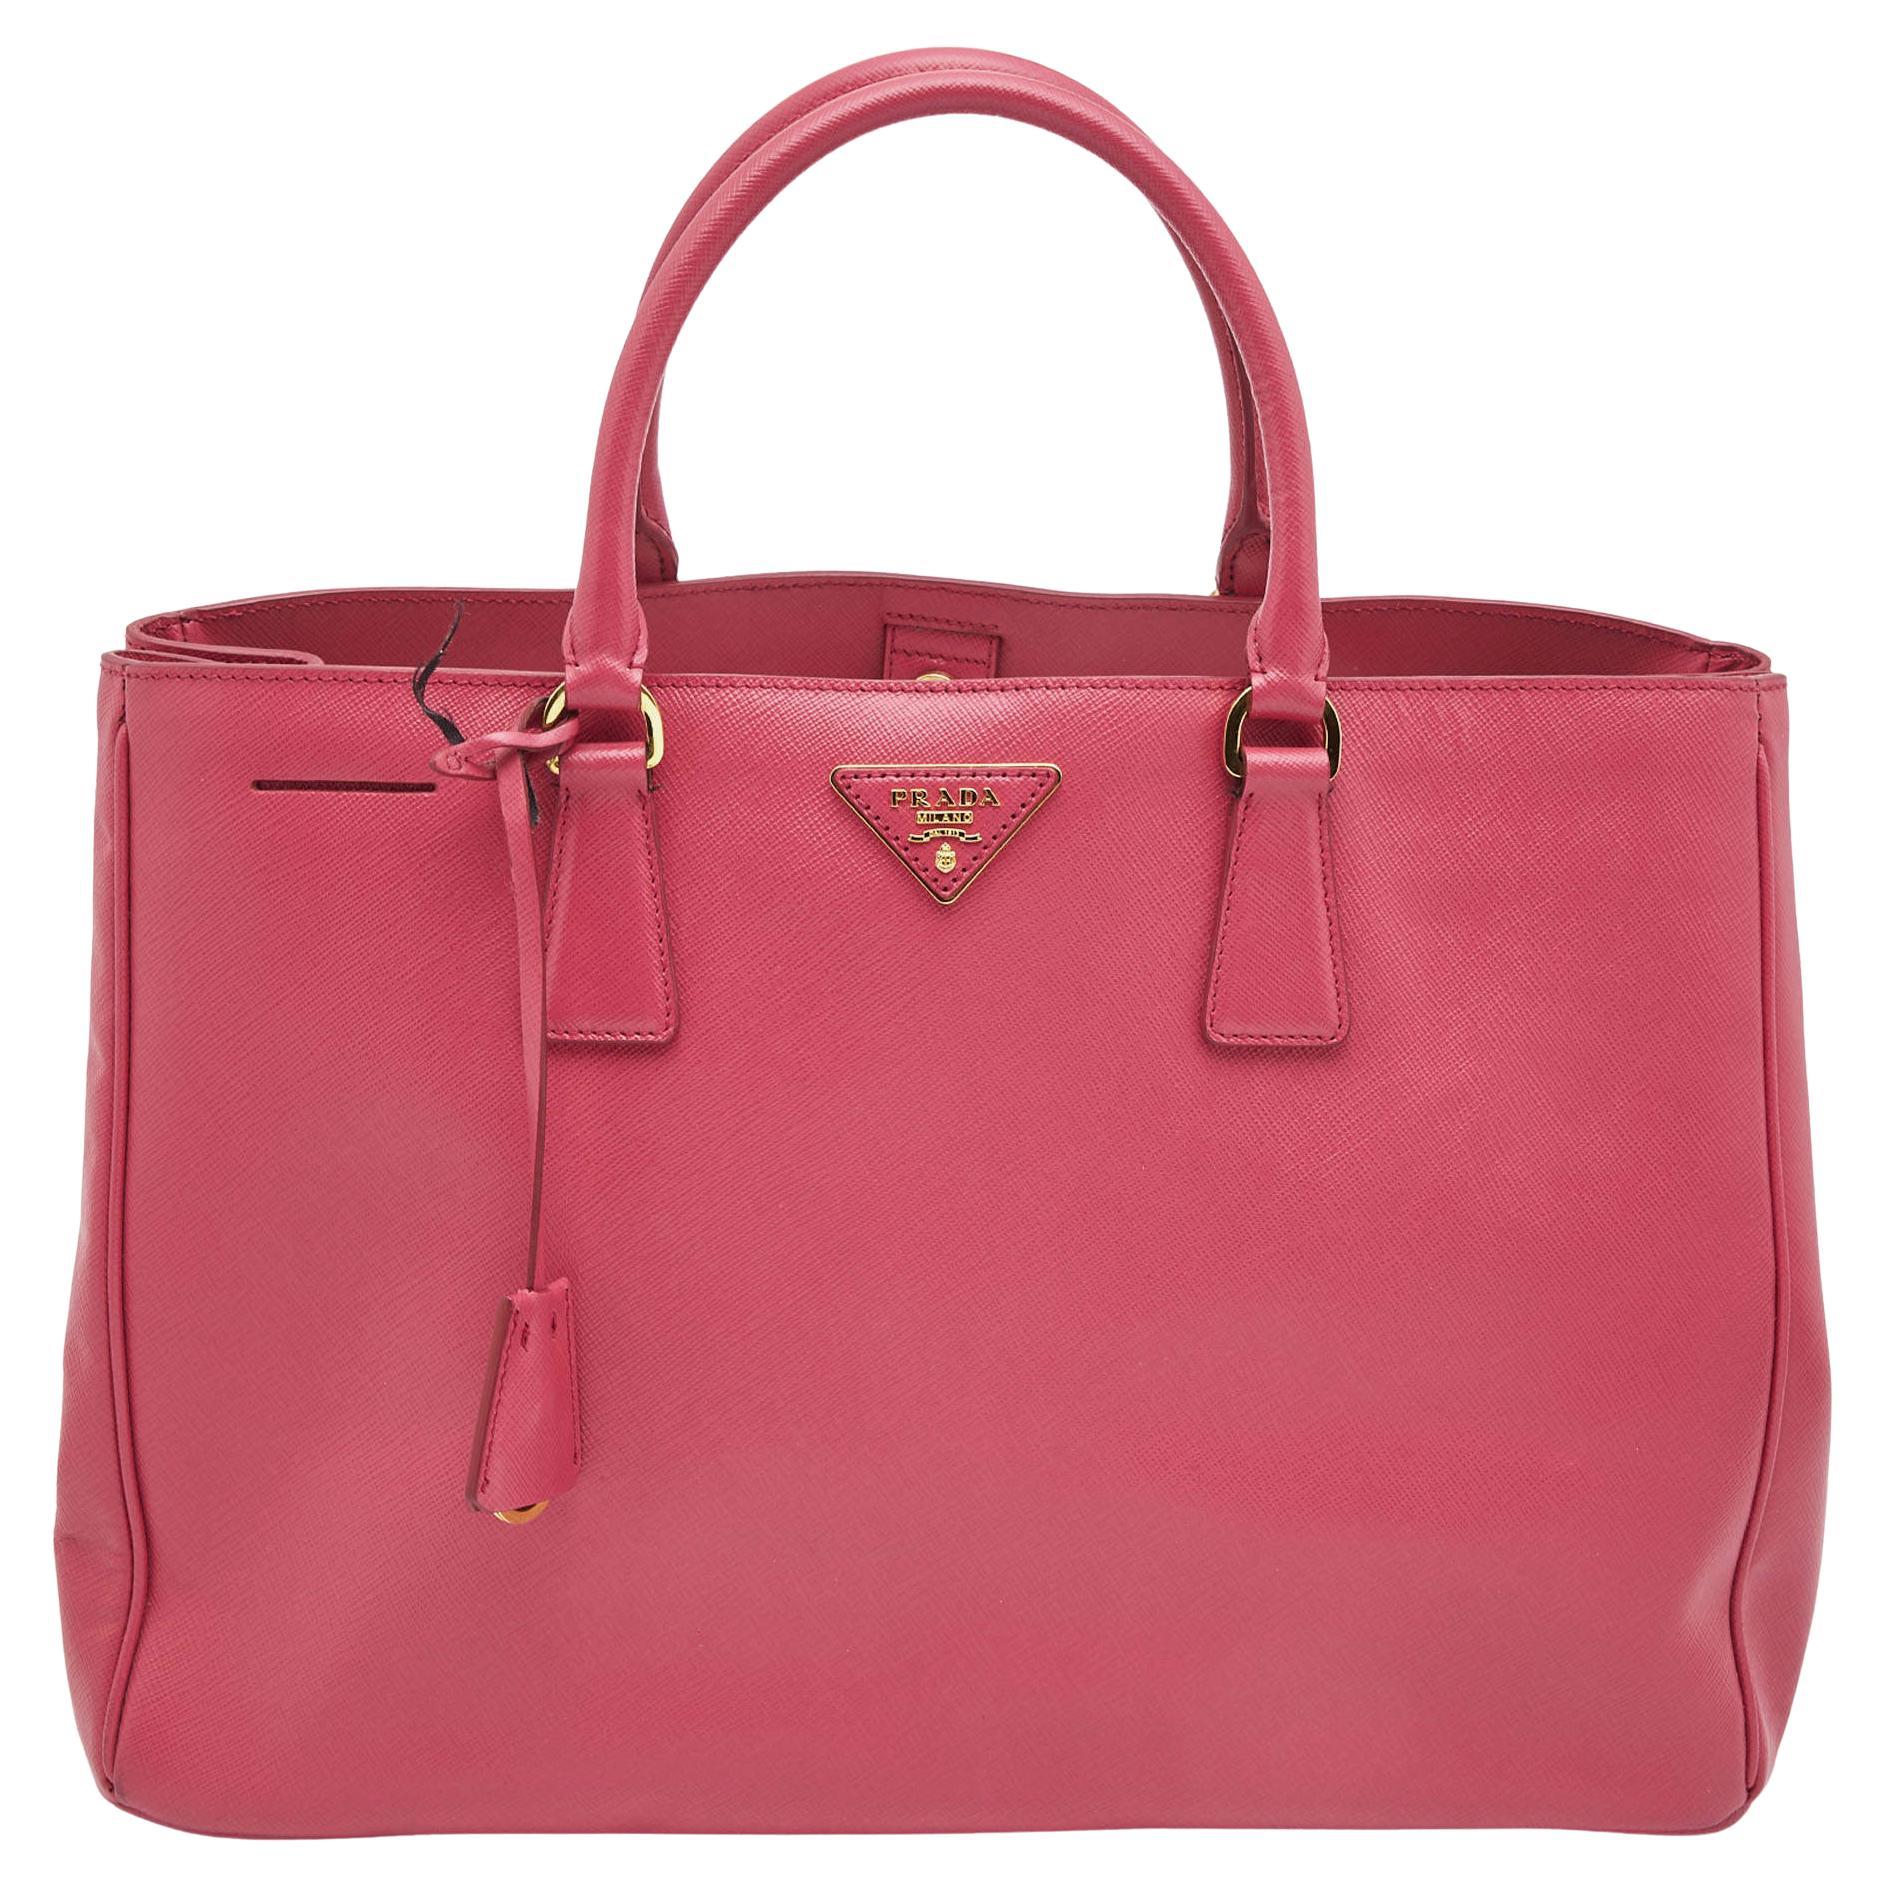 Preowned Authentic Prada 2WAY Mini Boston Pink Bag